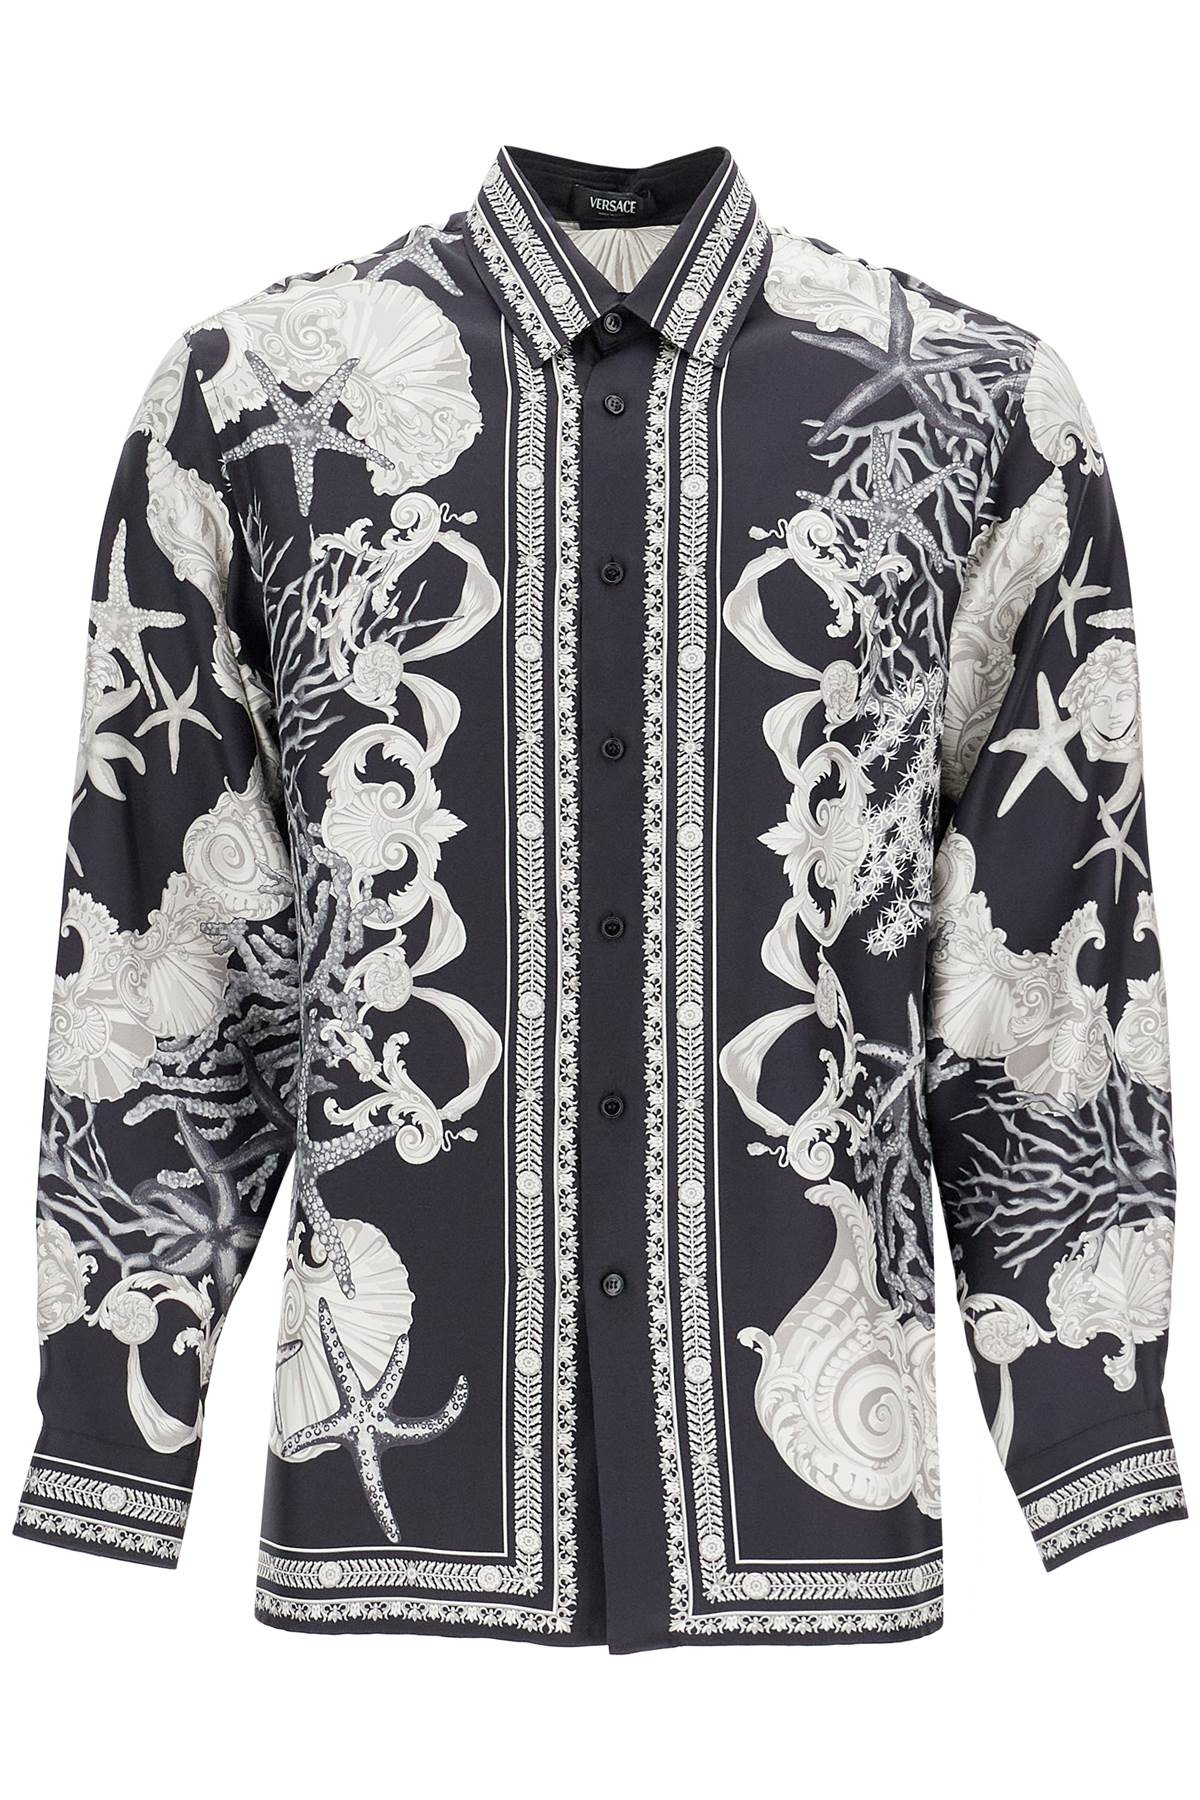 Versace VERSACE barocco sea silk shirt